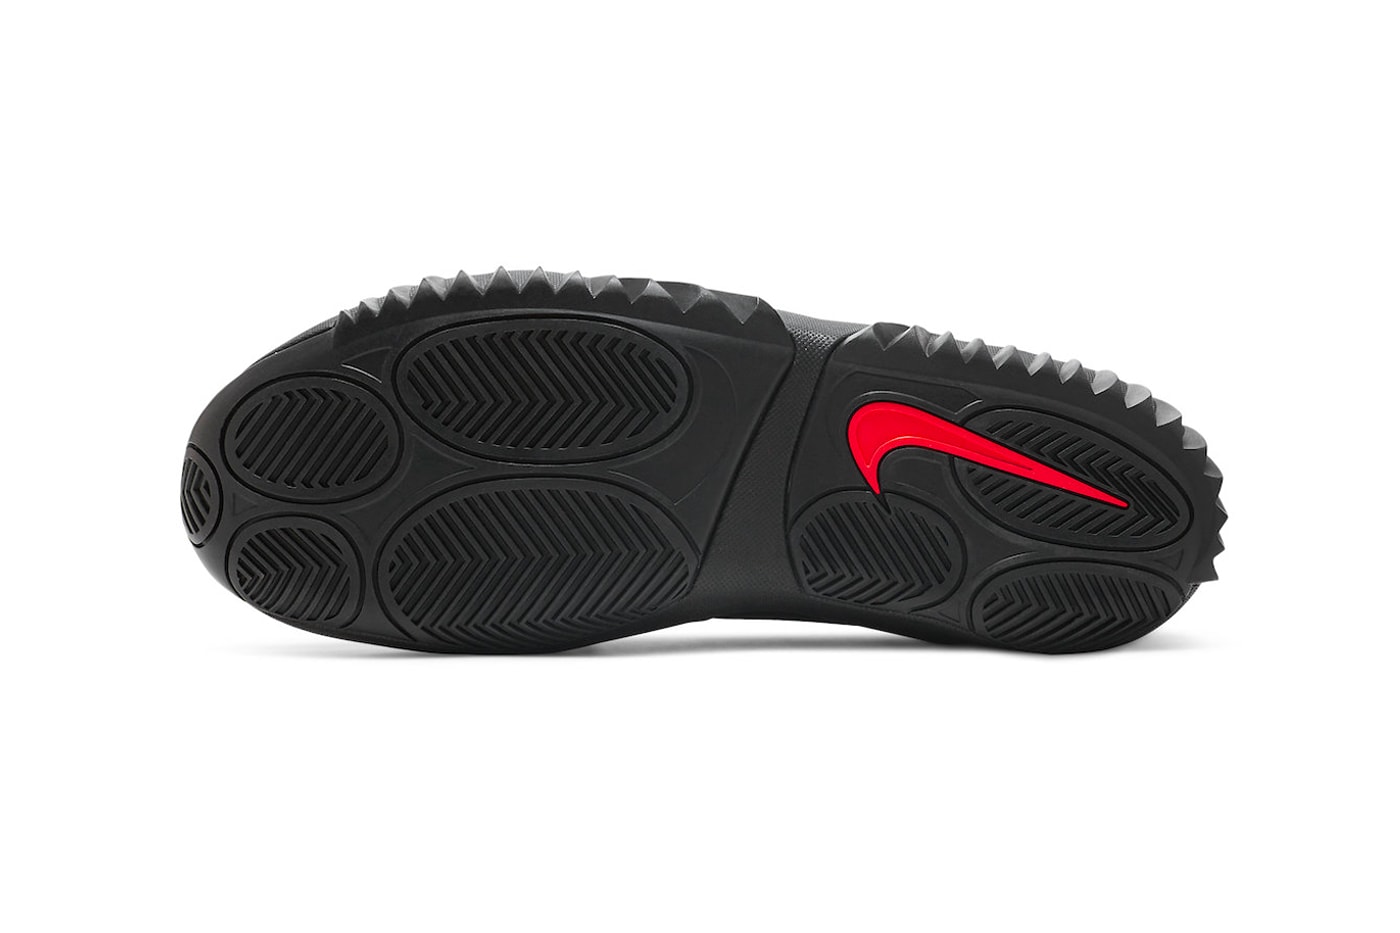 Tinker Hatfield Nike Zoom Court Dragon First Look Release Info DV8166-001 Date Buy Price 